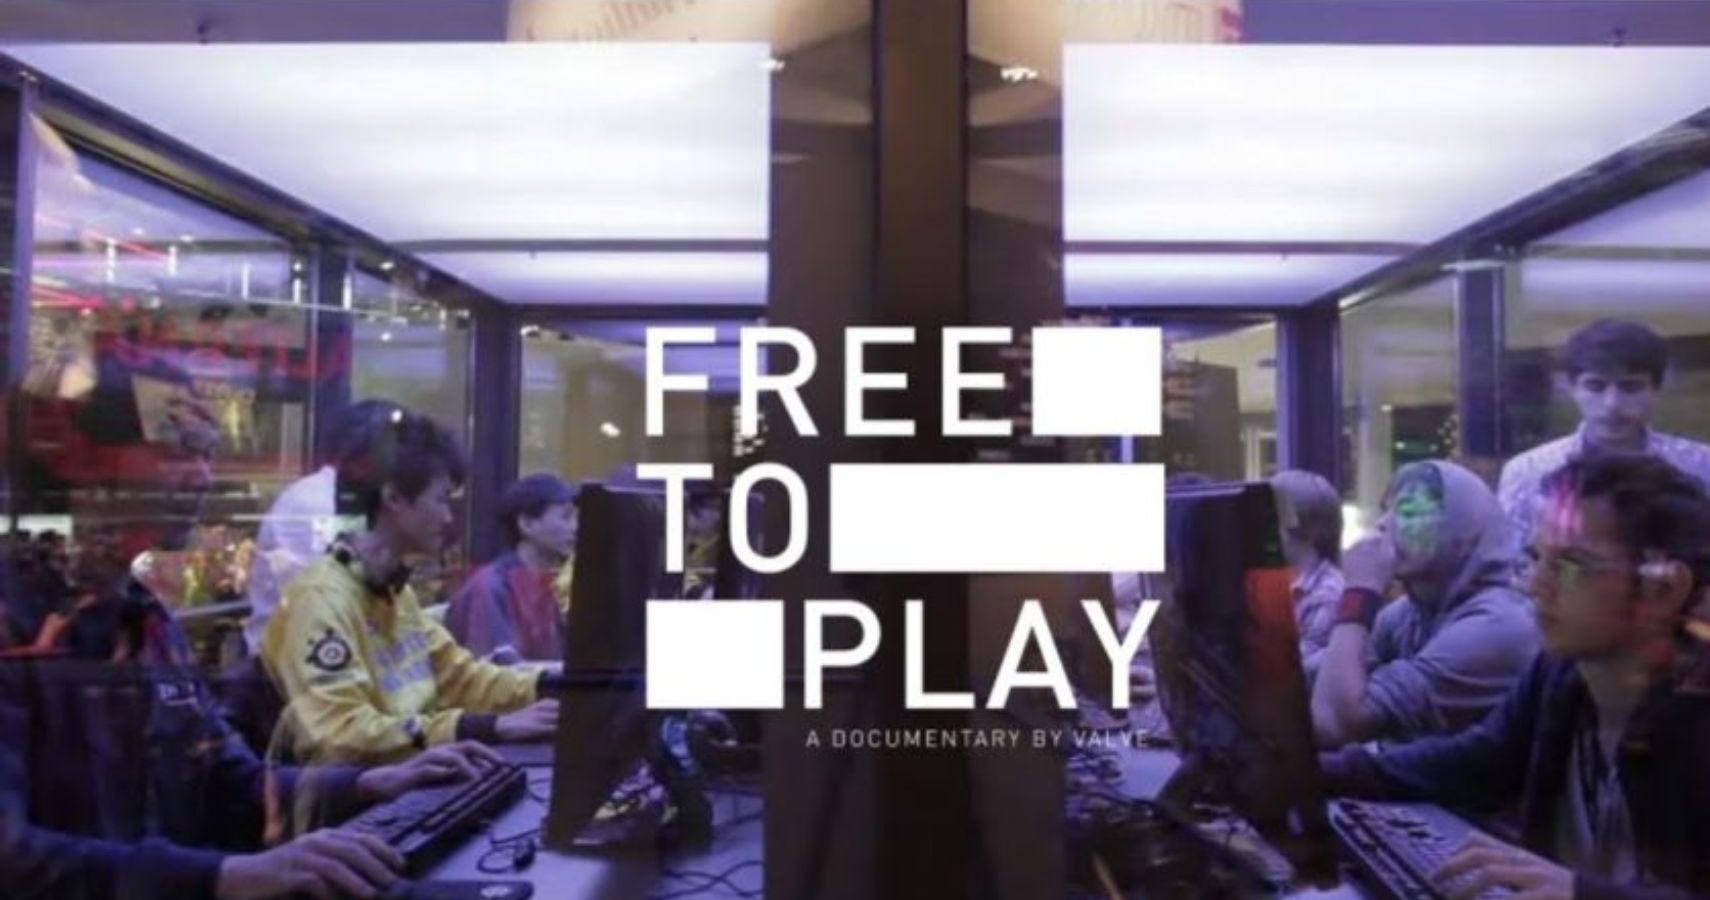 Valve's Upcoming Dota 2 Documentary, 'Free to Play' Coming Soon